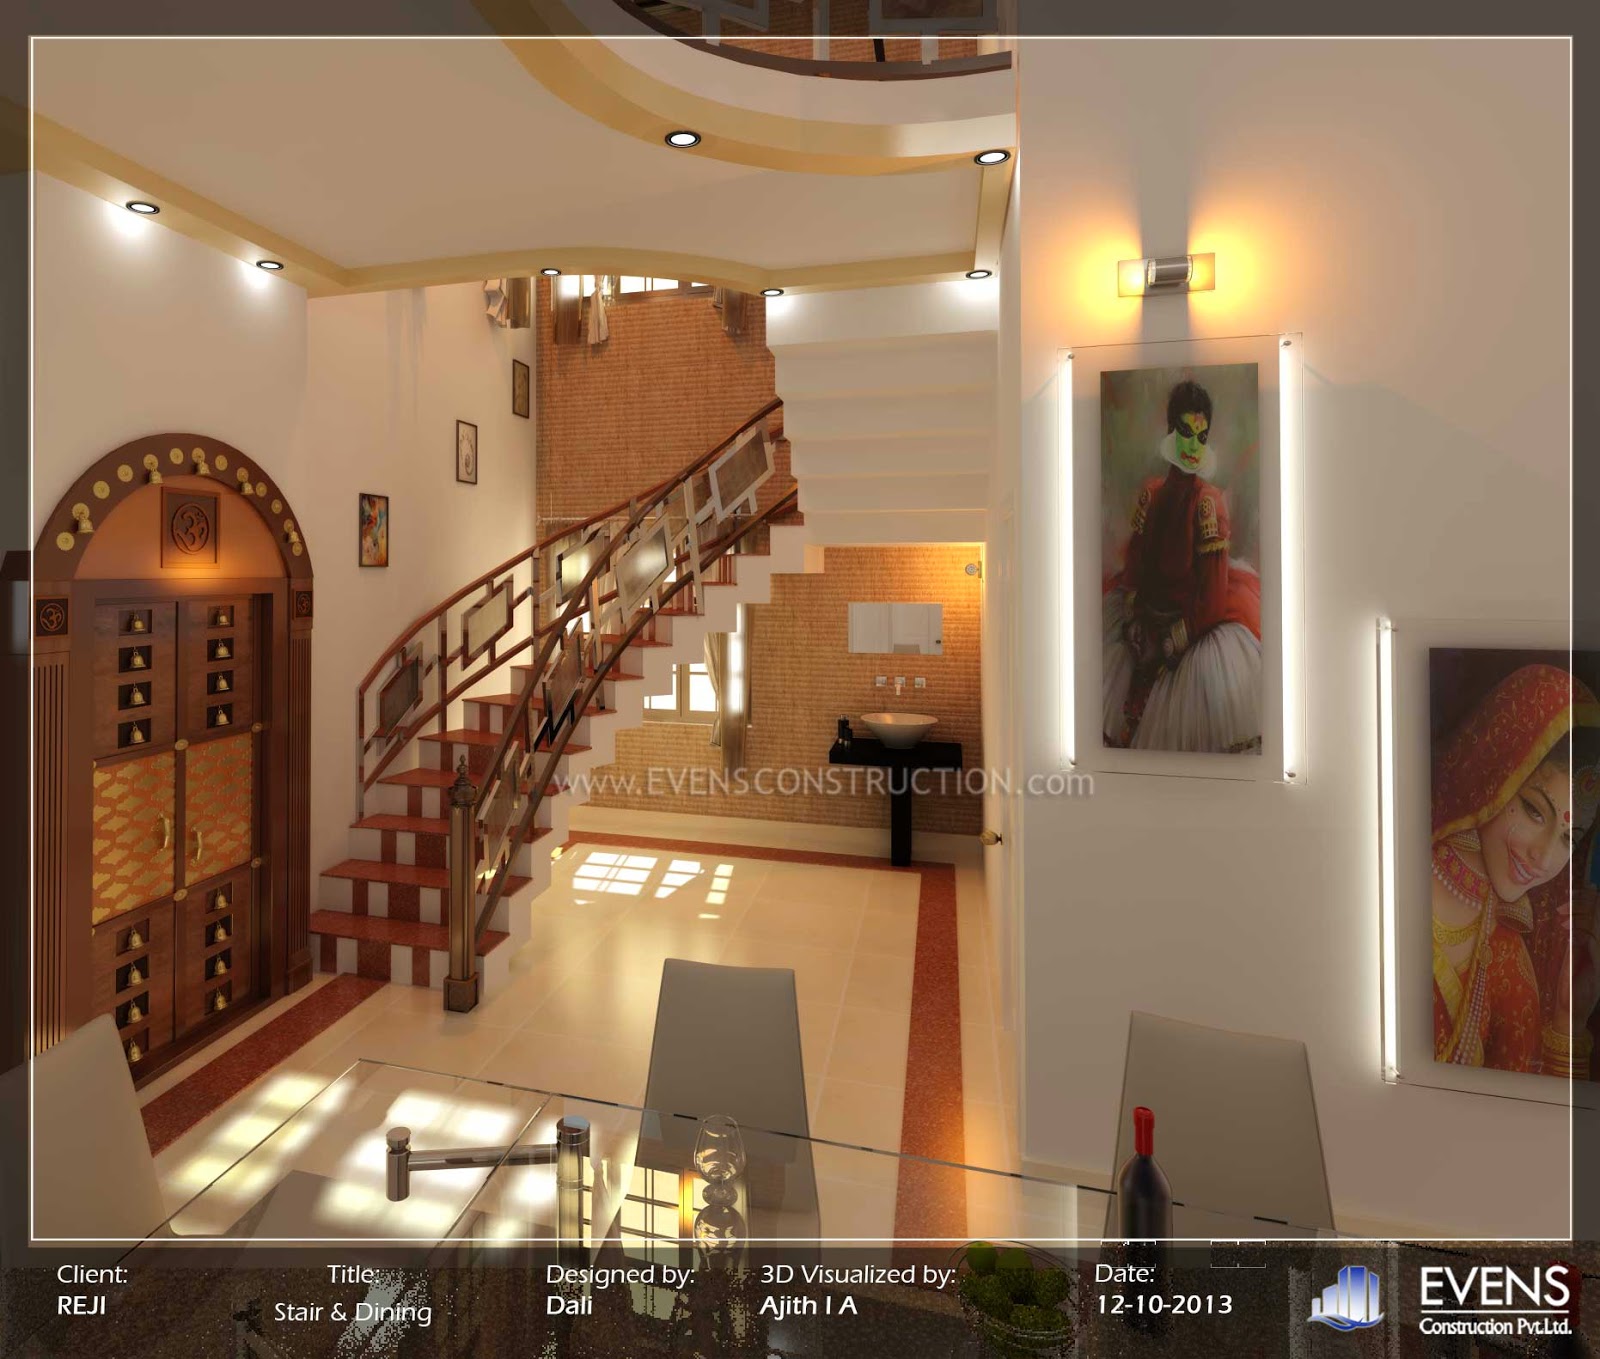 Evens Construction Pvt Ltd: Staircase Design Kerala Houses